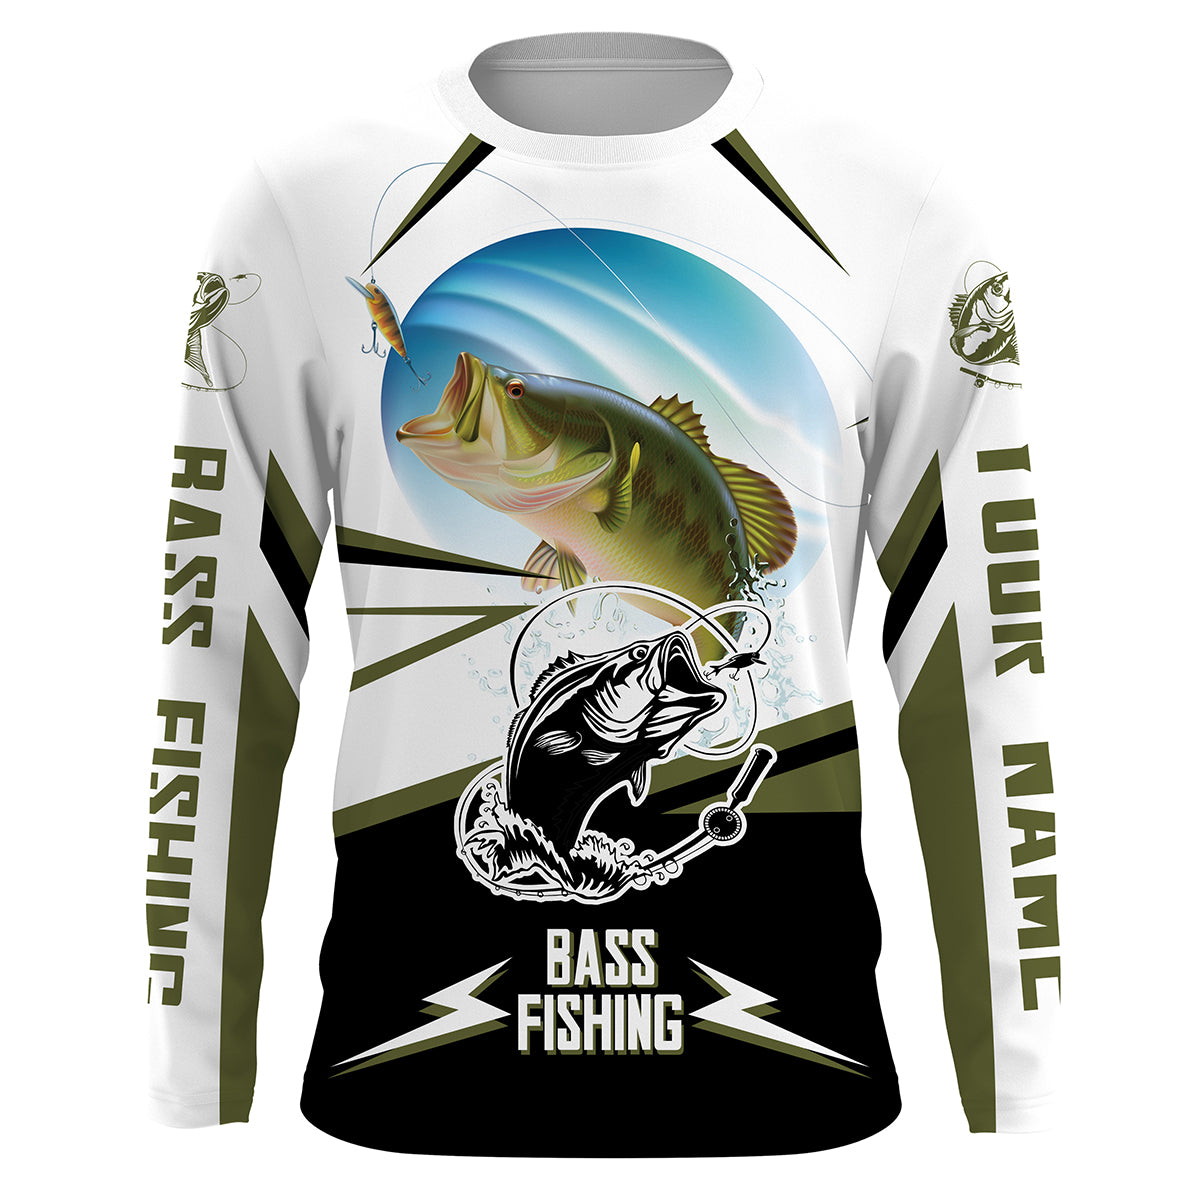 Bass Fishing shirt UV protection quick dry customize name, personalize –  Myfihu